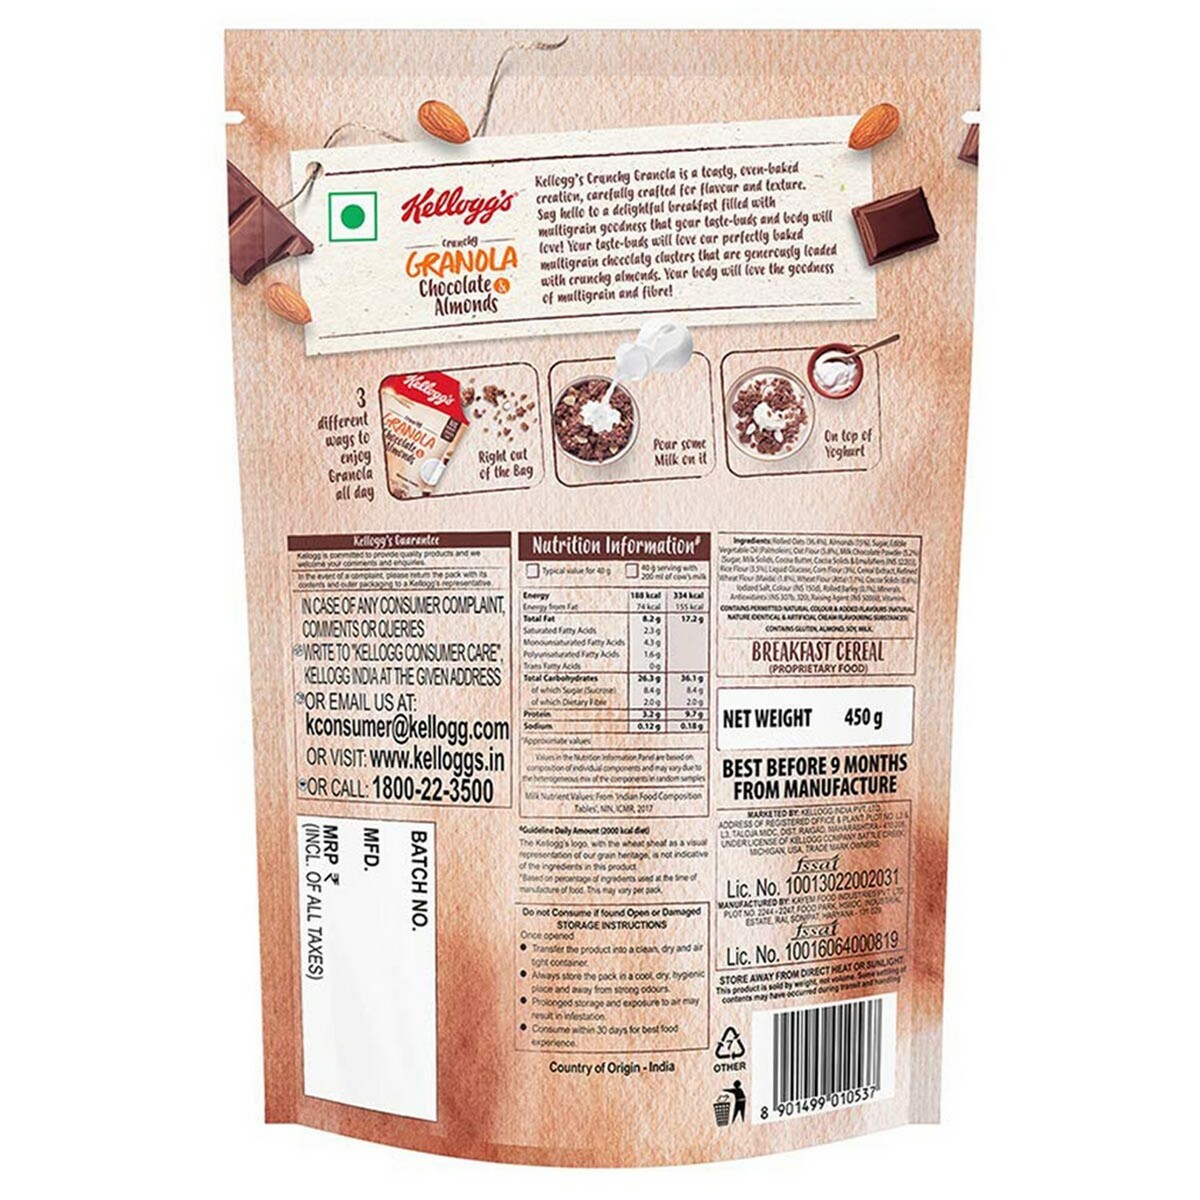 Kellogg's Crunchy Granola Chocolate & Almonds 450 g